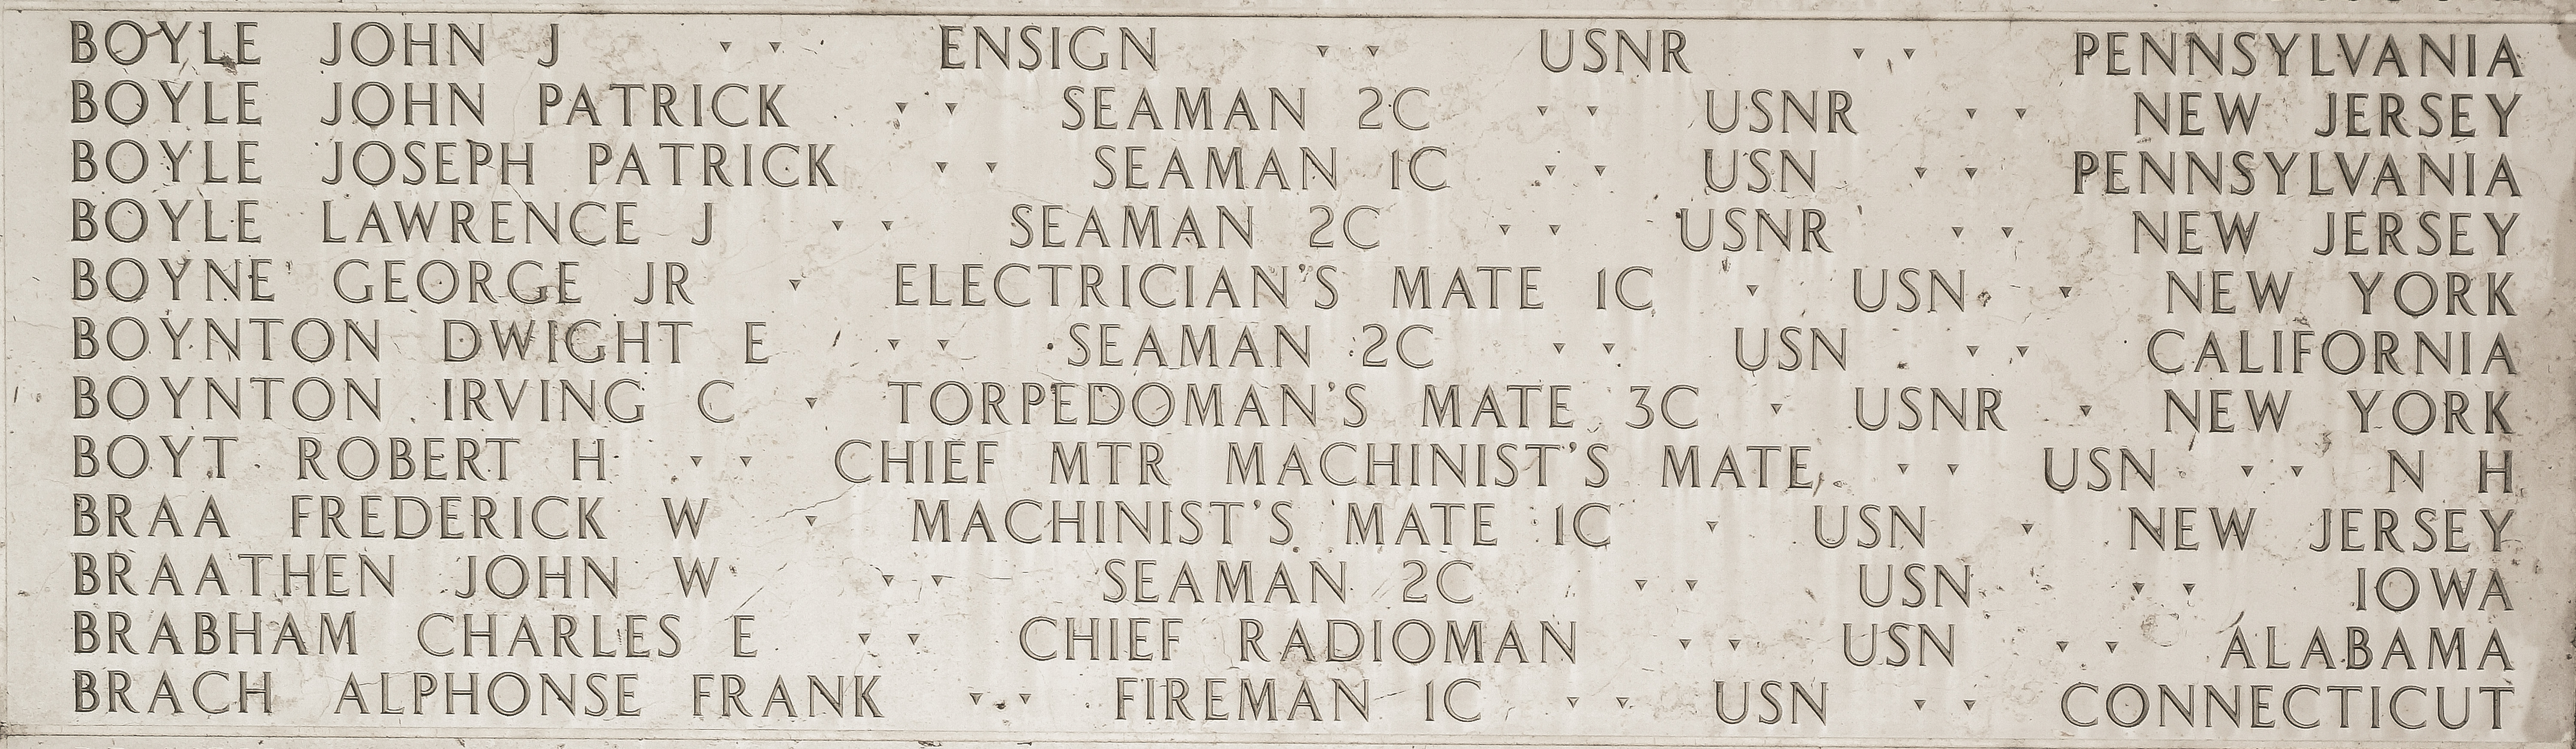 Charles E. Brabham, Chief Radioman